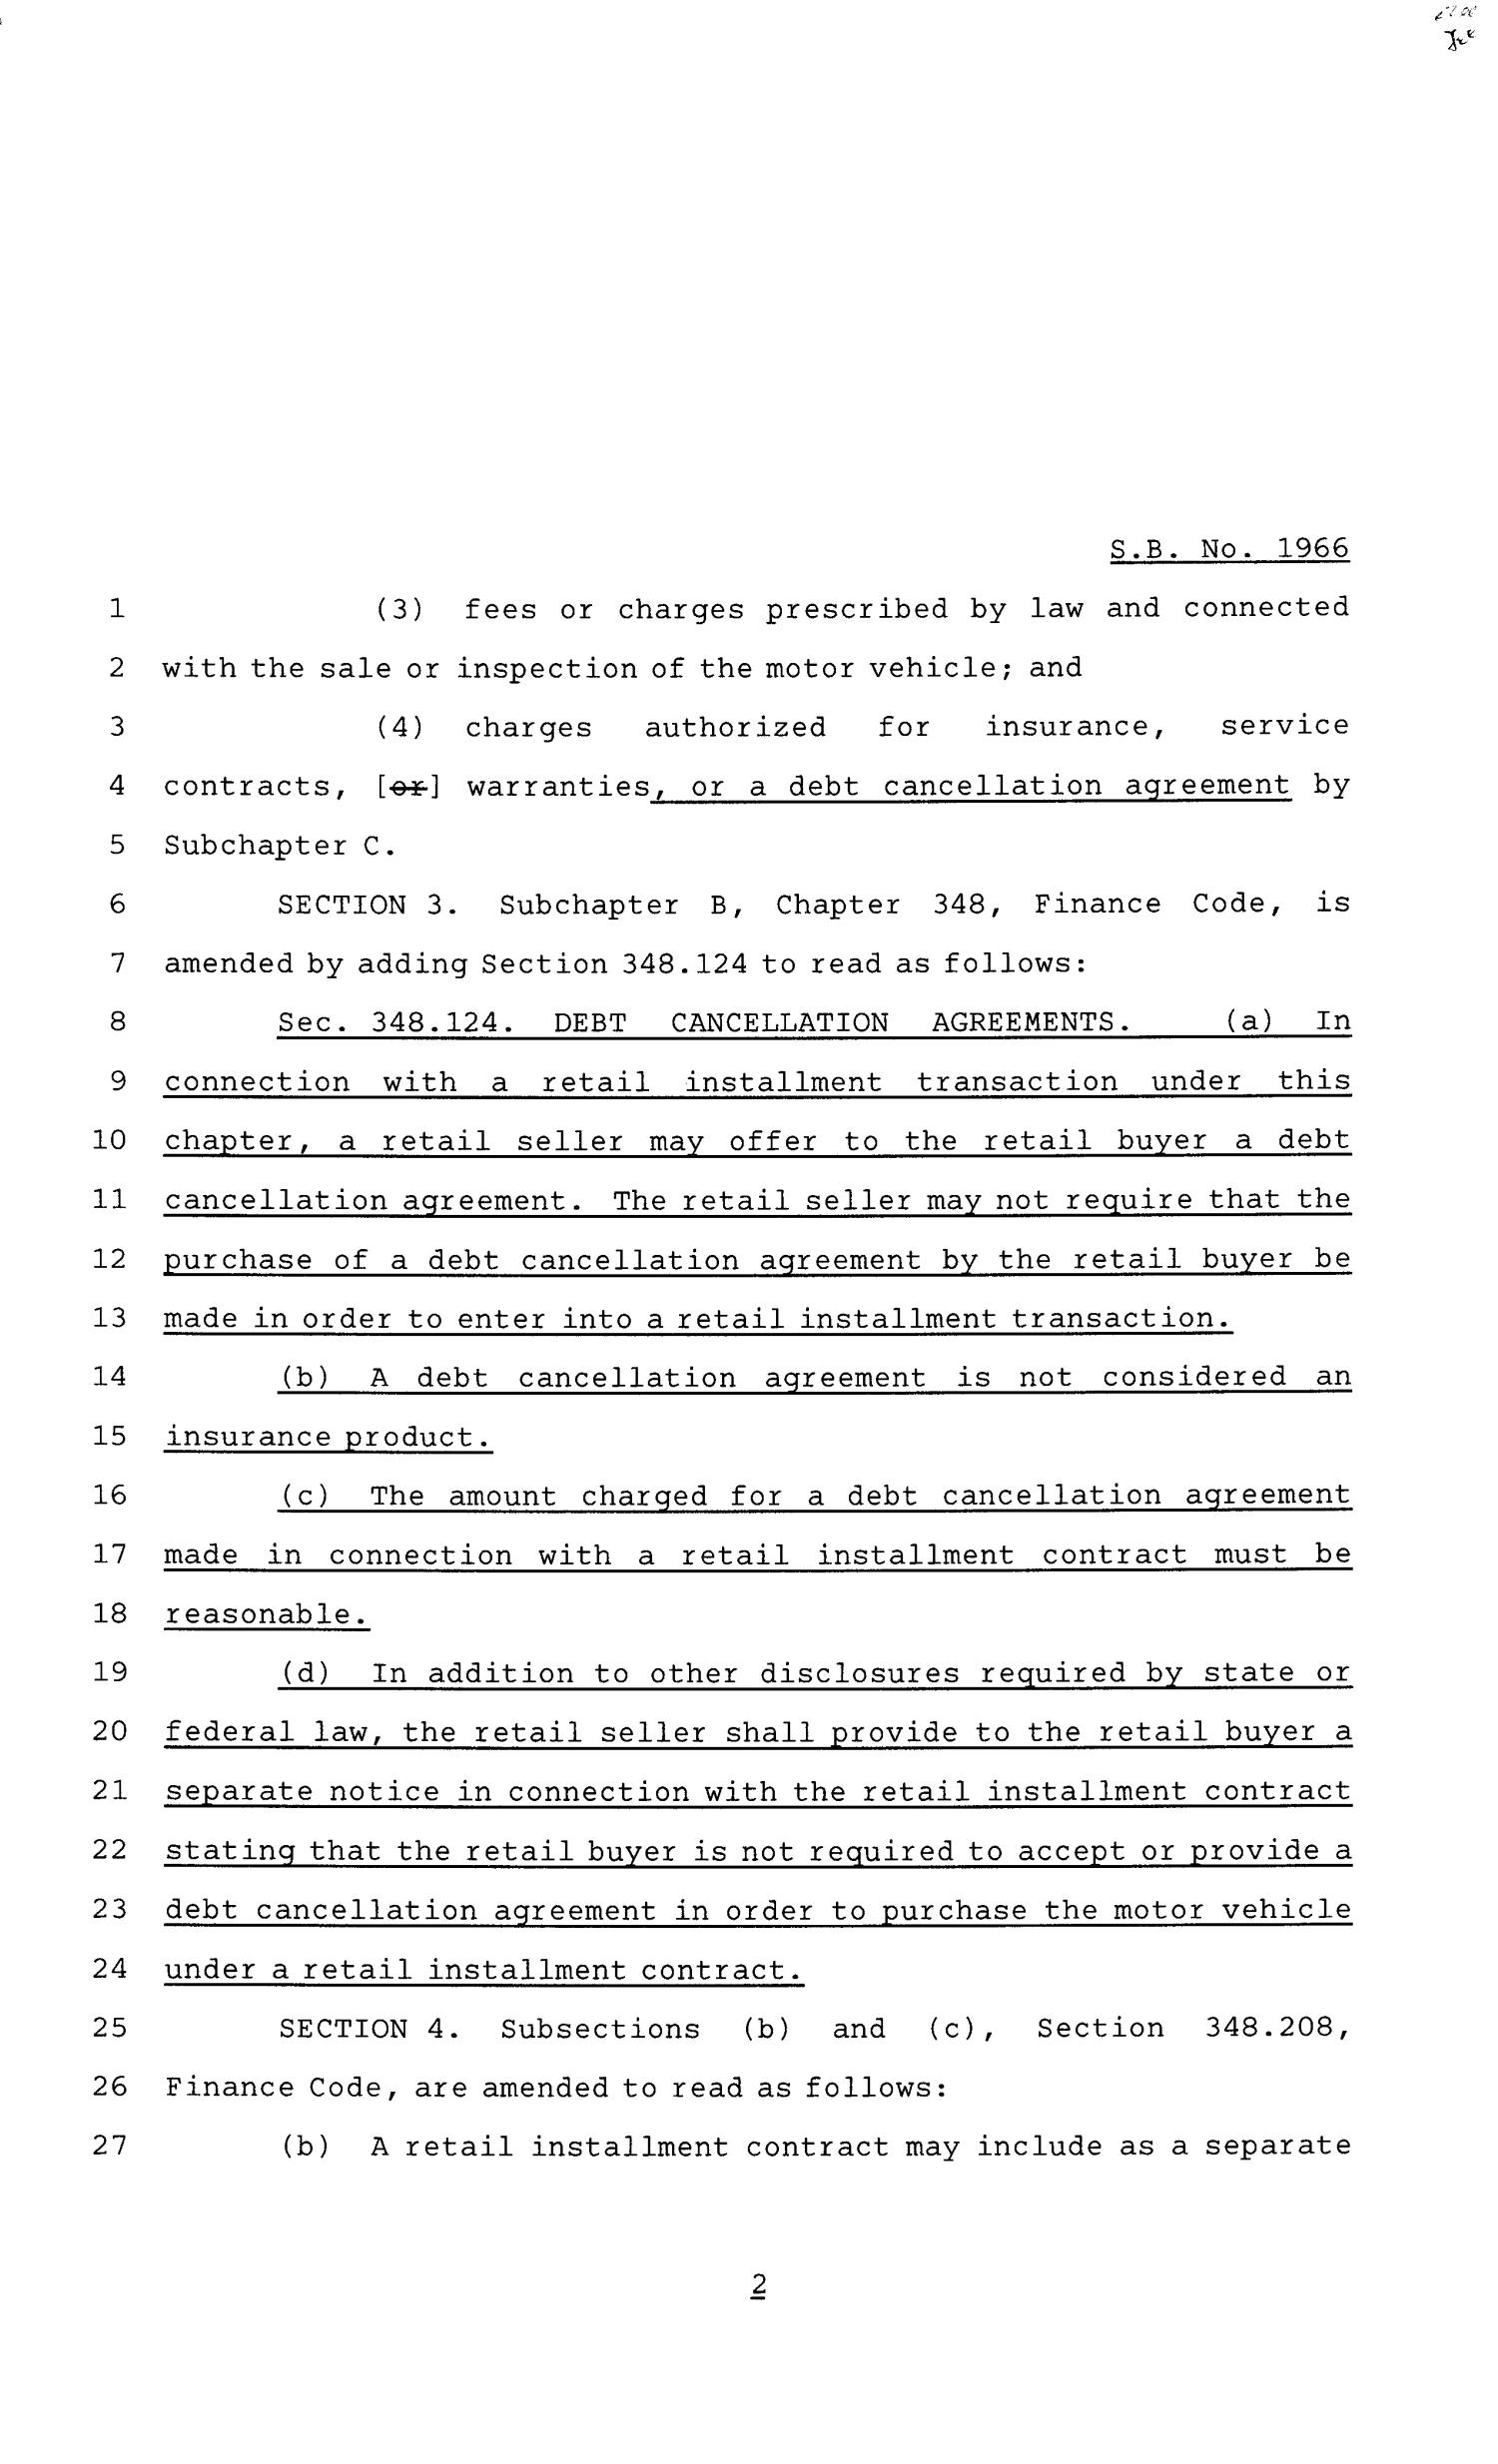 81st Texas Legislature, Senate Bill 1966, Chapter 149 Page 2 of 